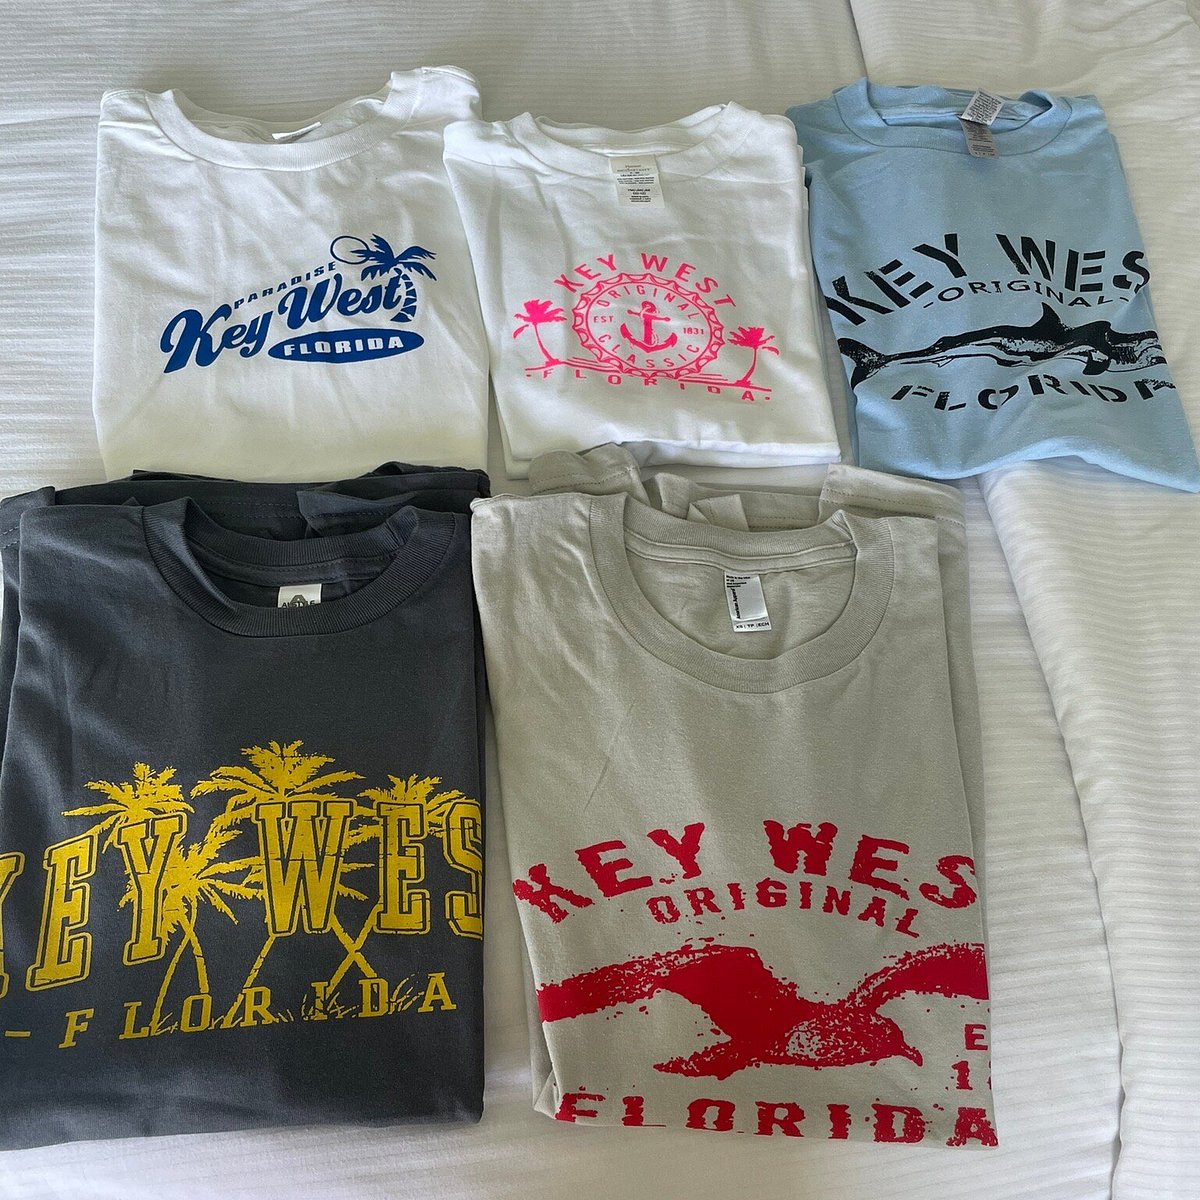 Yeti Straw Lids - Florida Keys Outfitters